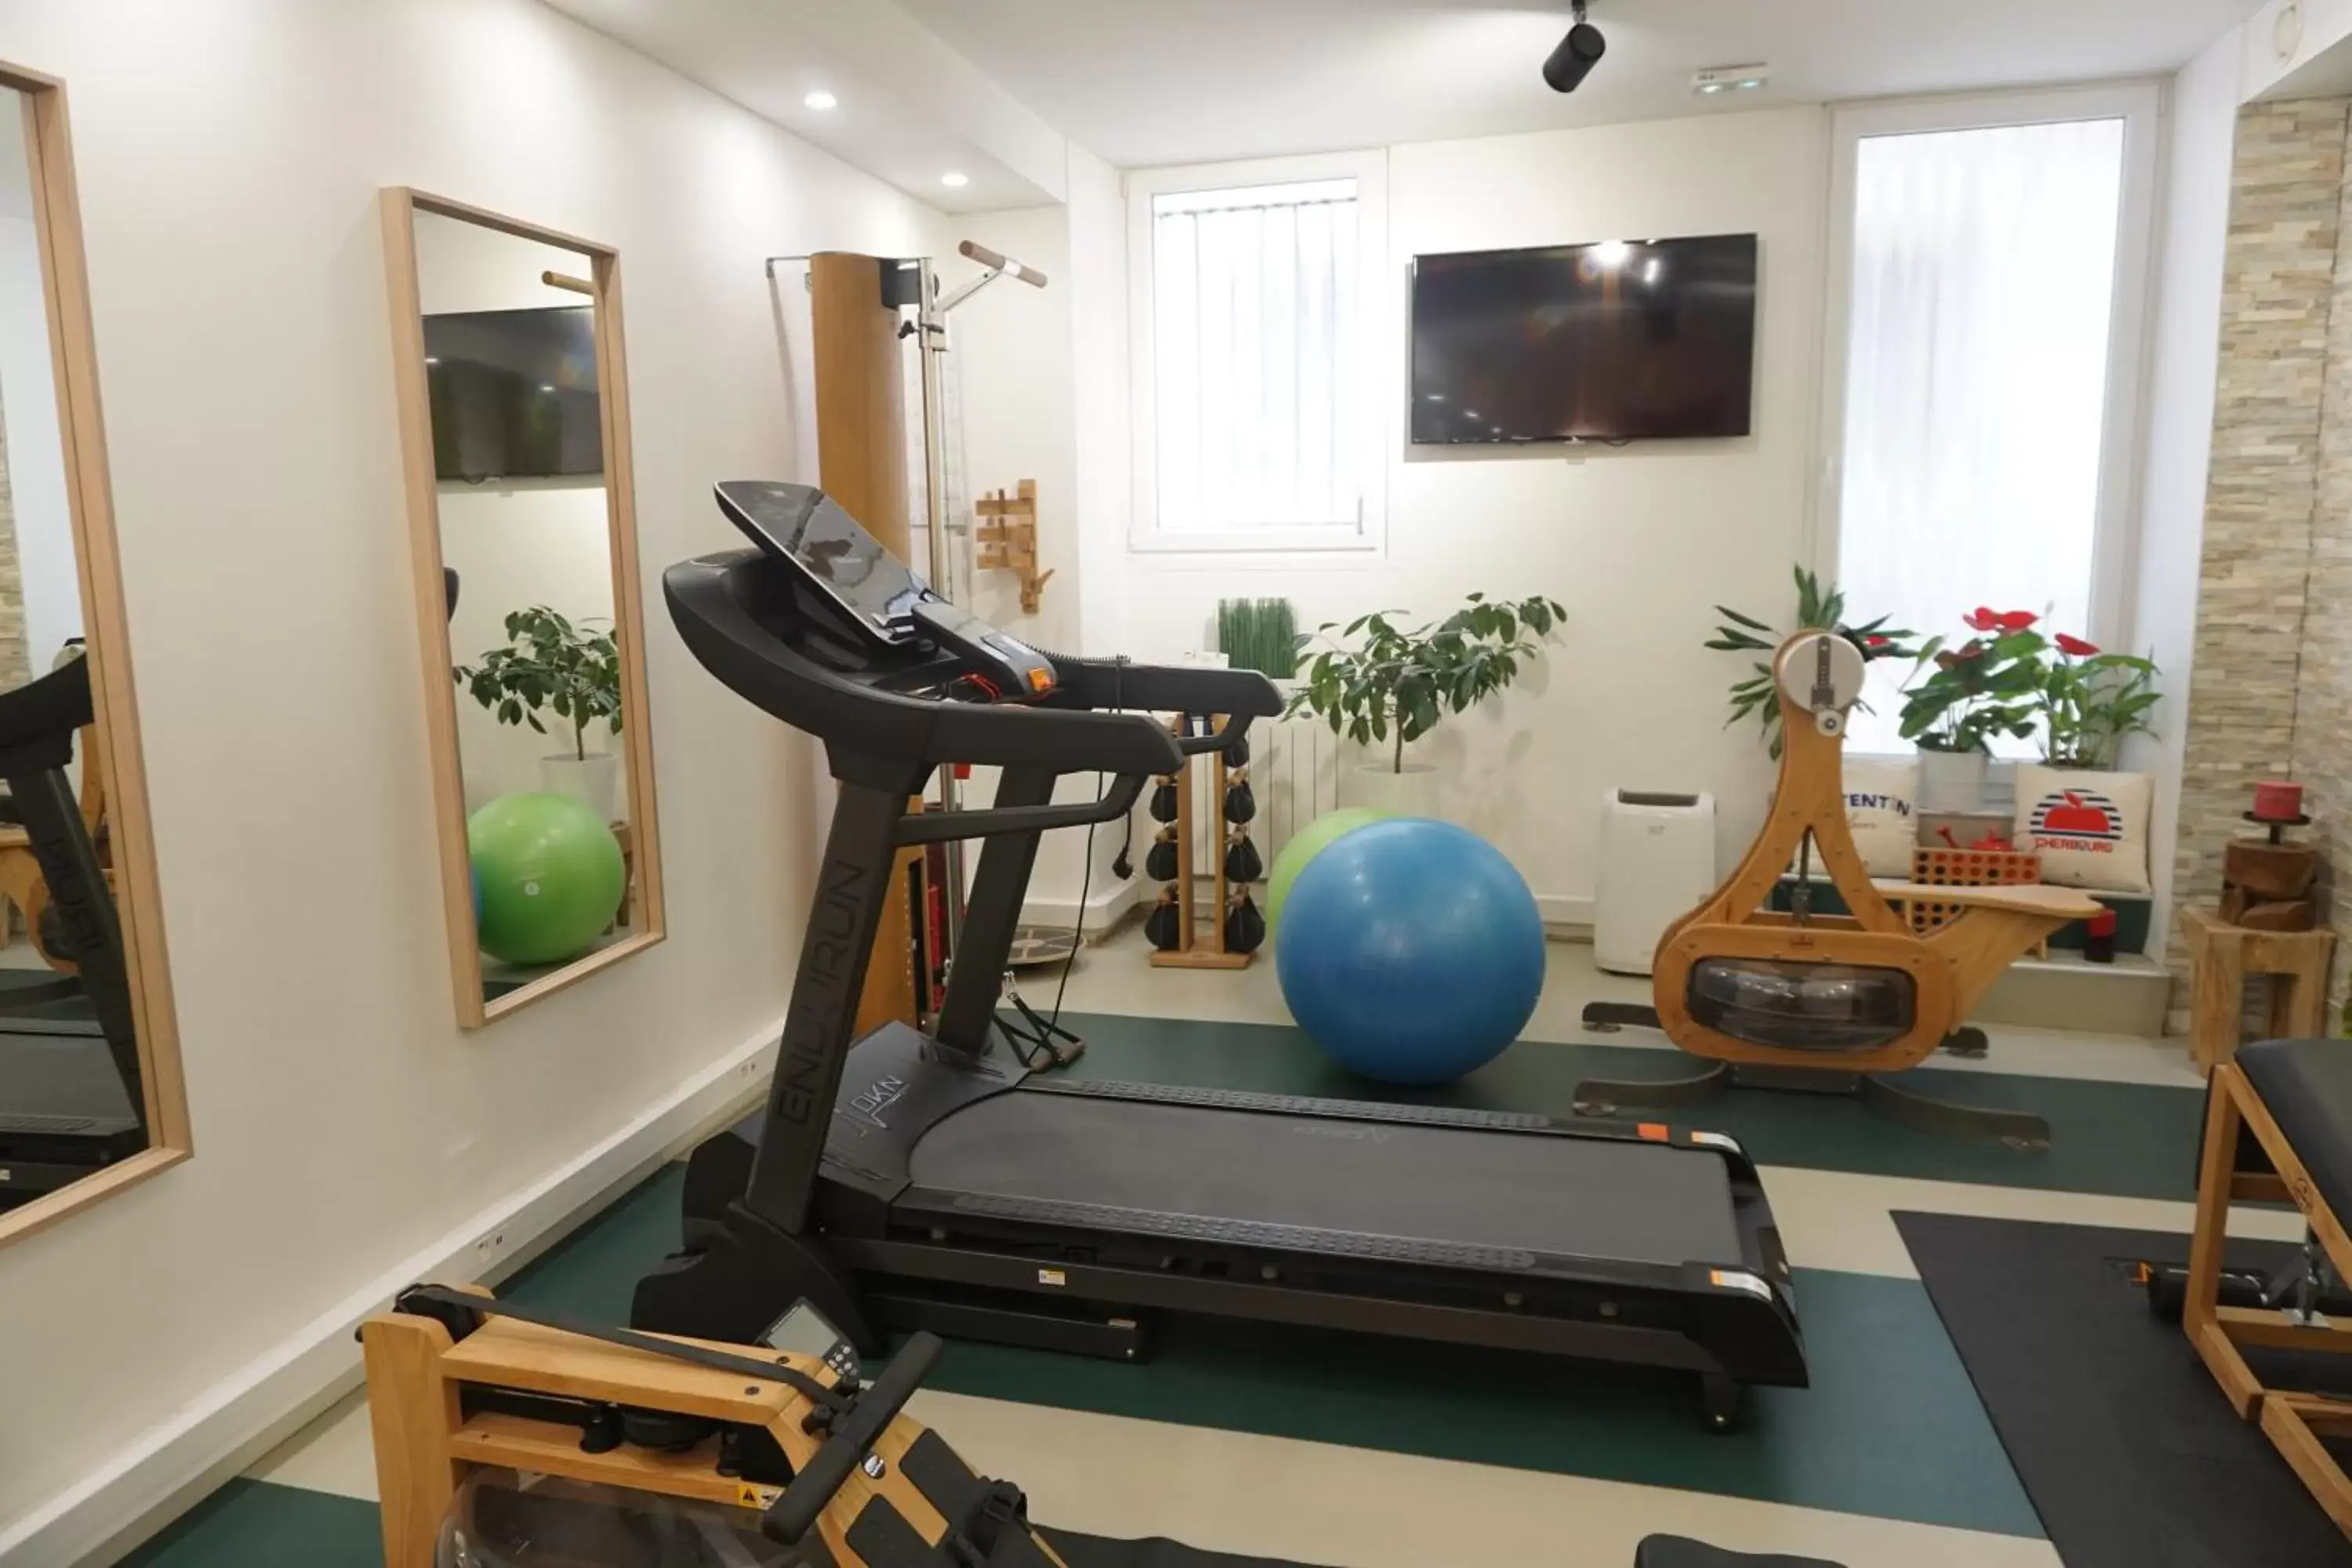 Fitness centre/facilities, Fitness Center/Facilities in Ambassadeur Hotel - Cherbourg Port de Plaisance